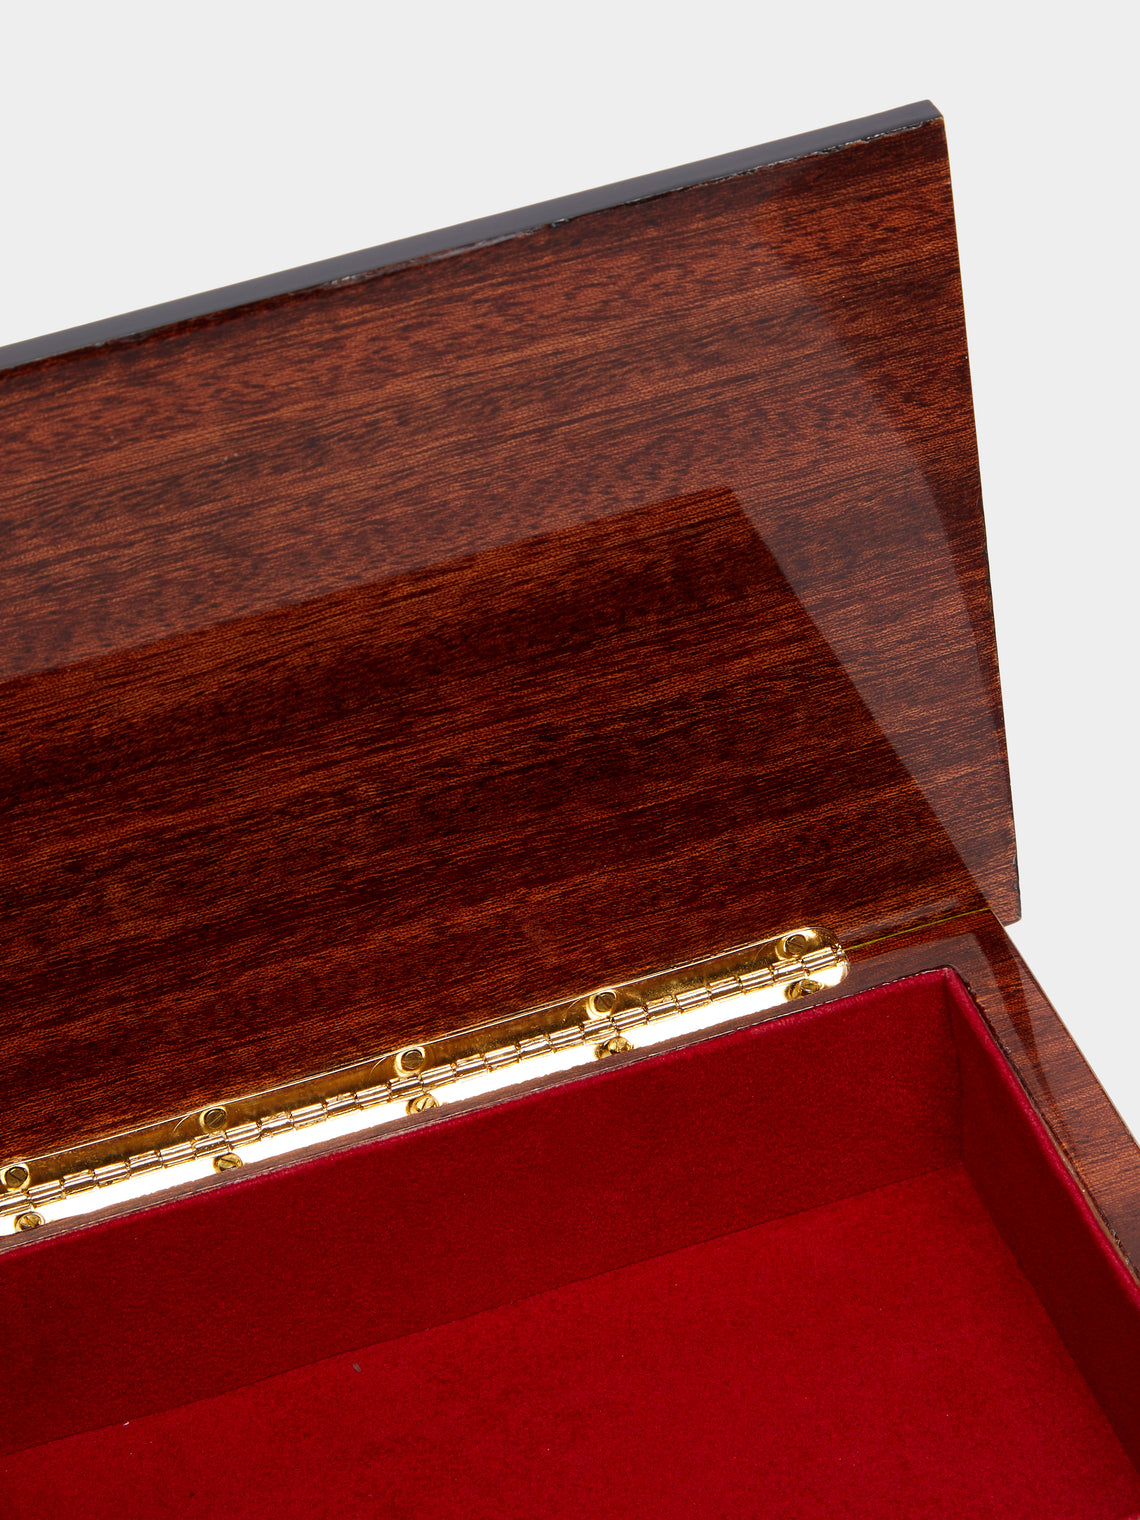 Biagio Barile - Triangle Wood Inlay Box -  - ABASK